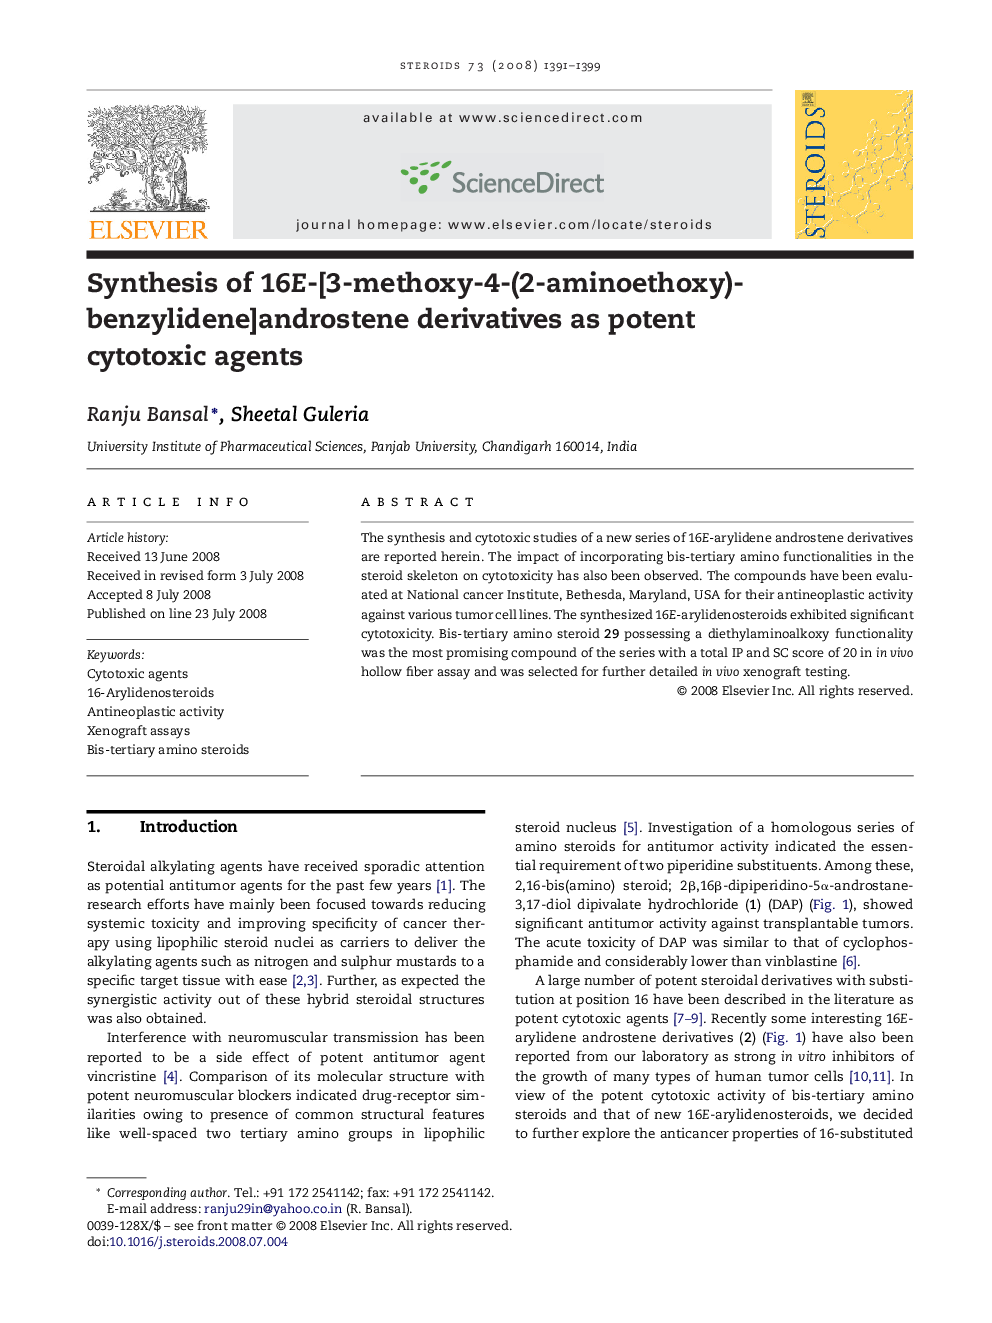 Synthesis of 16E-[3-methoxy-4-(2-aminoethoxy)benzylidene]androstene derivatives as potent cytotoxic agents